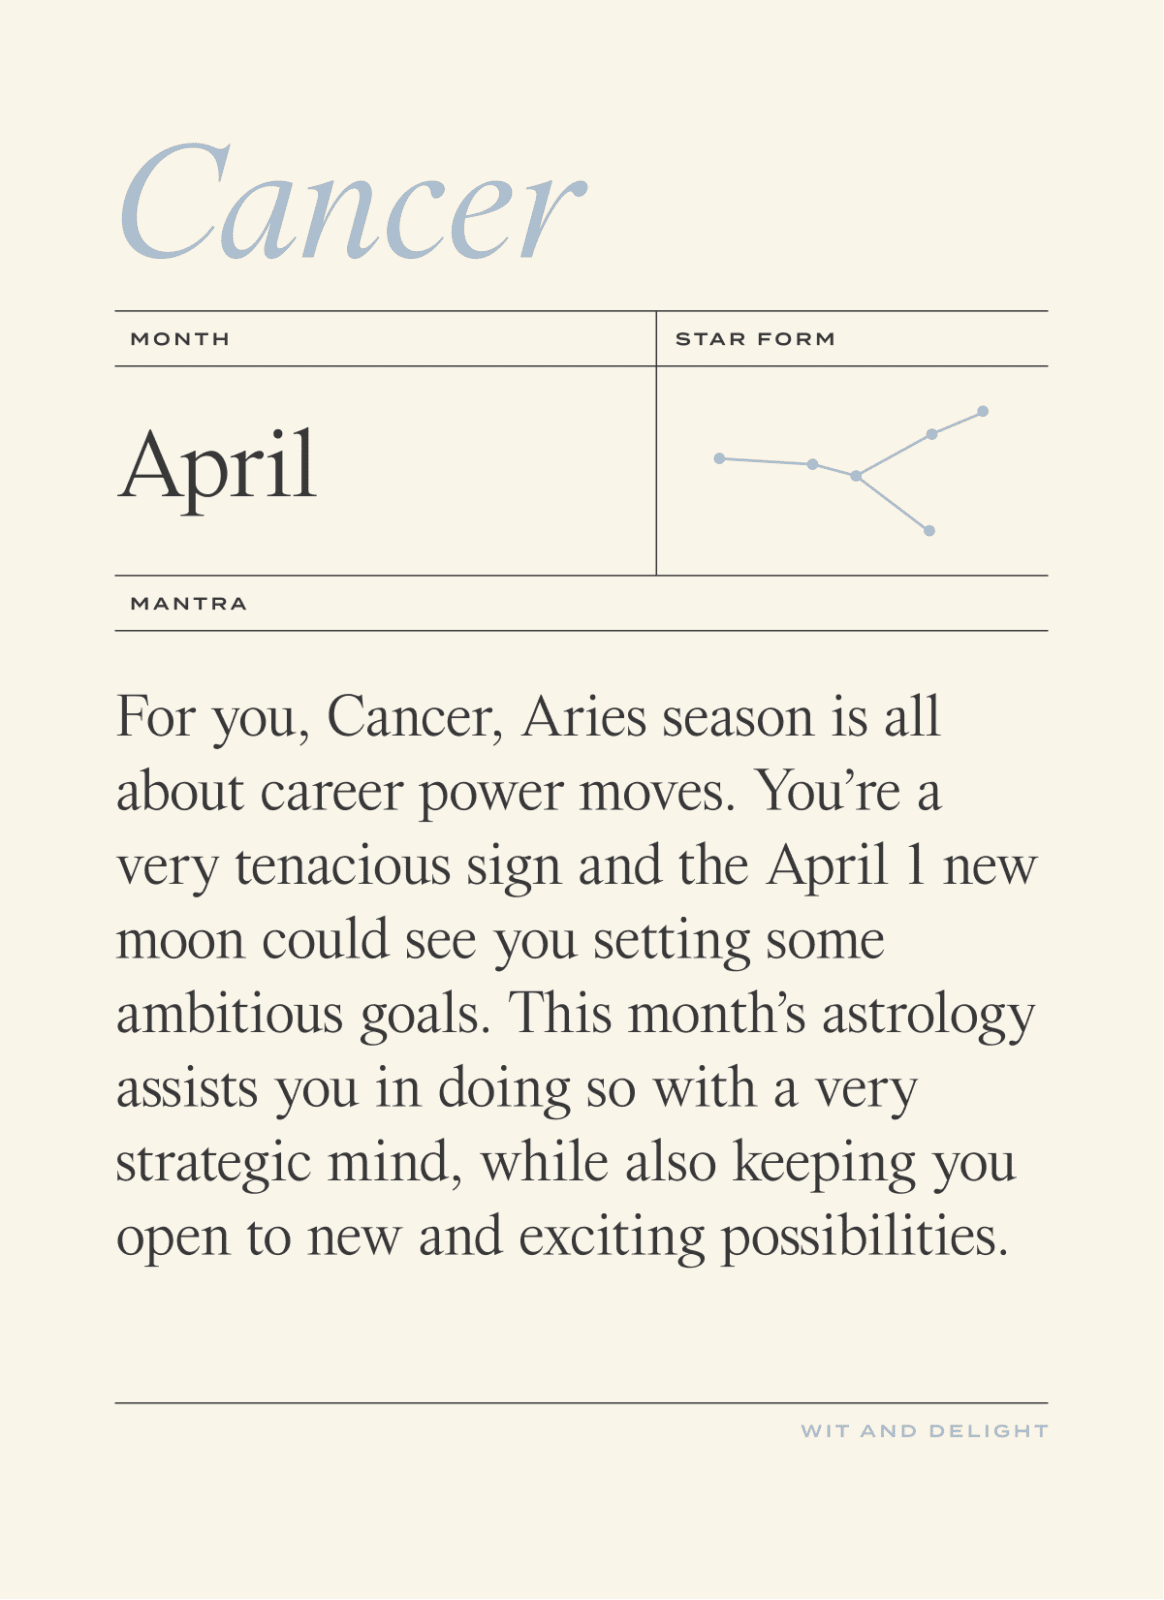 April 2022 Horoscope: Cancer